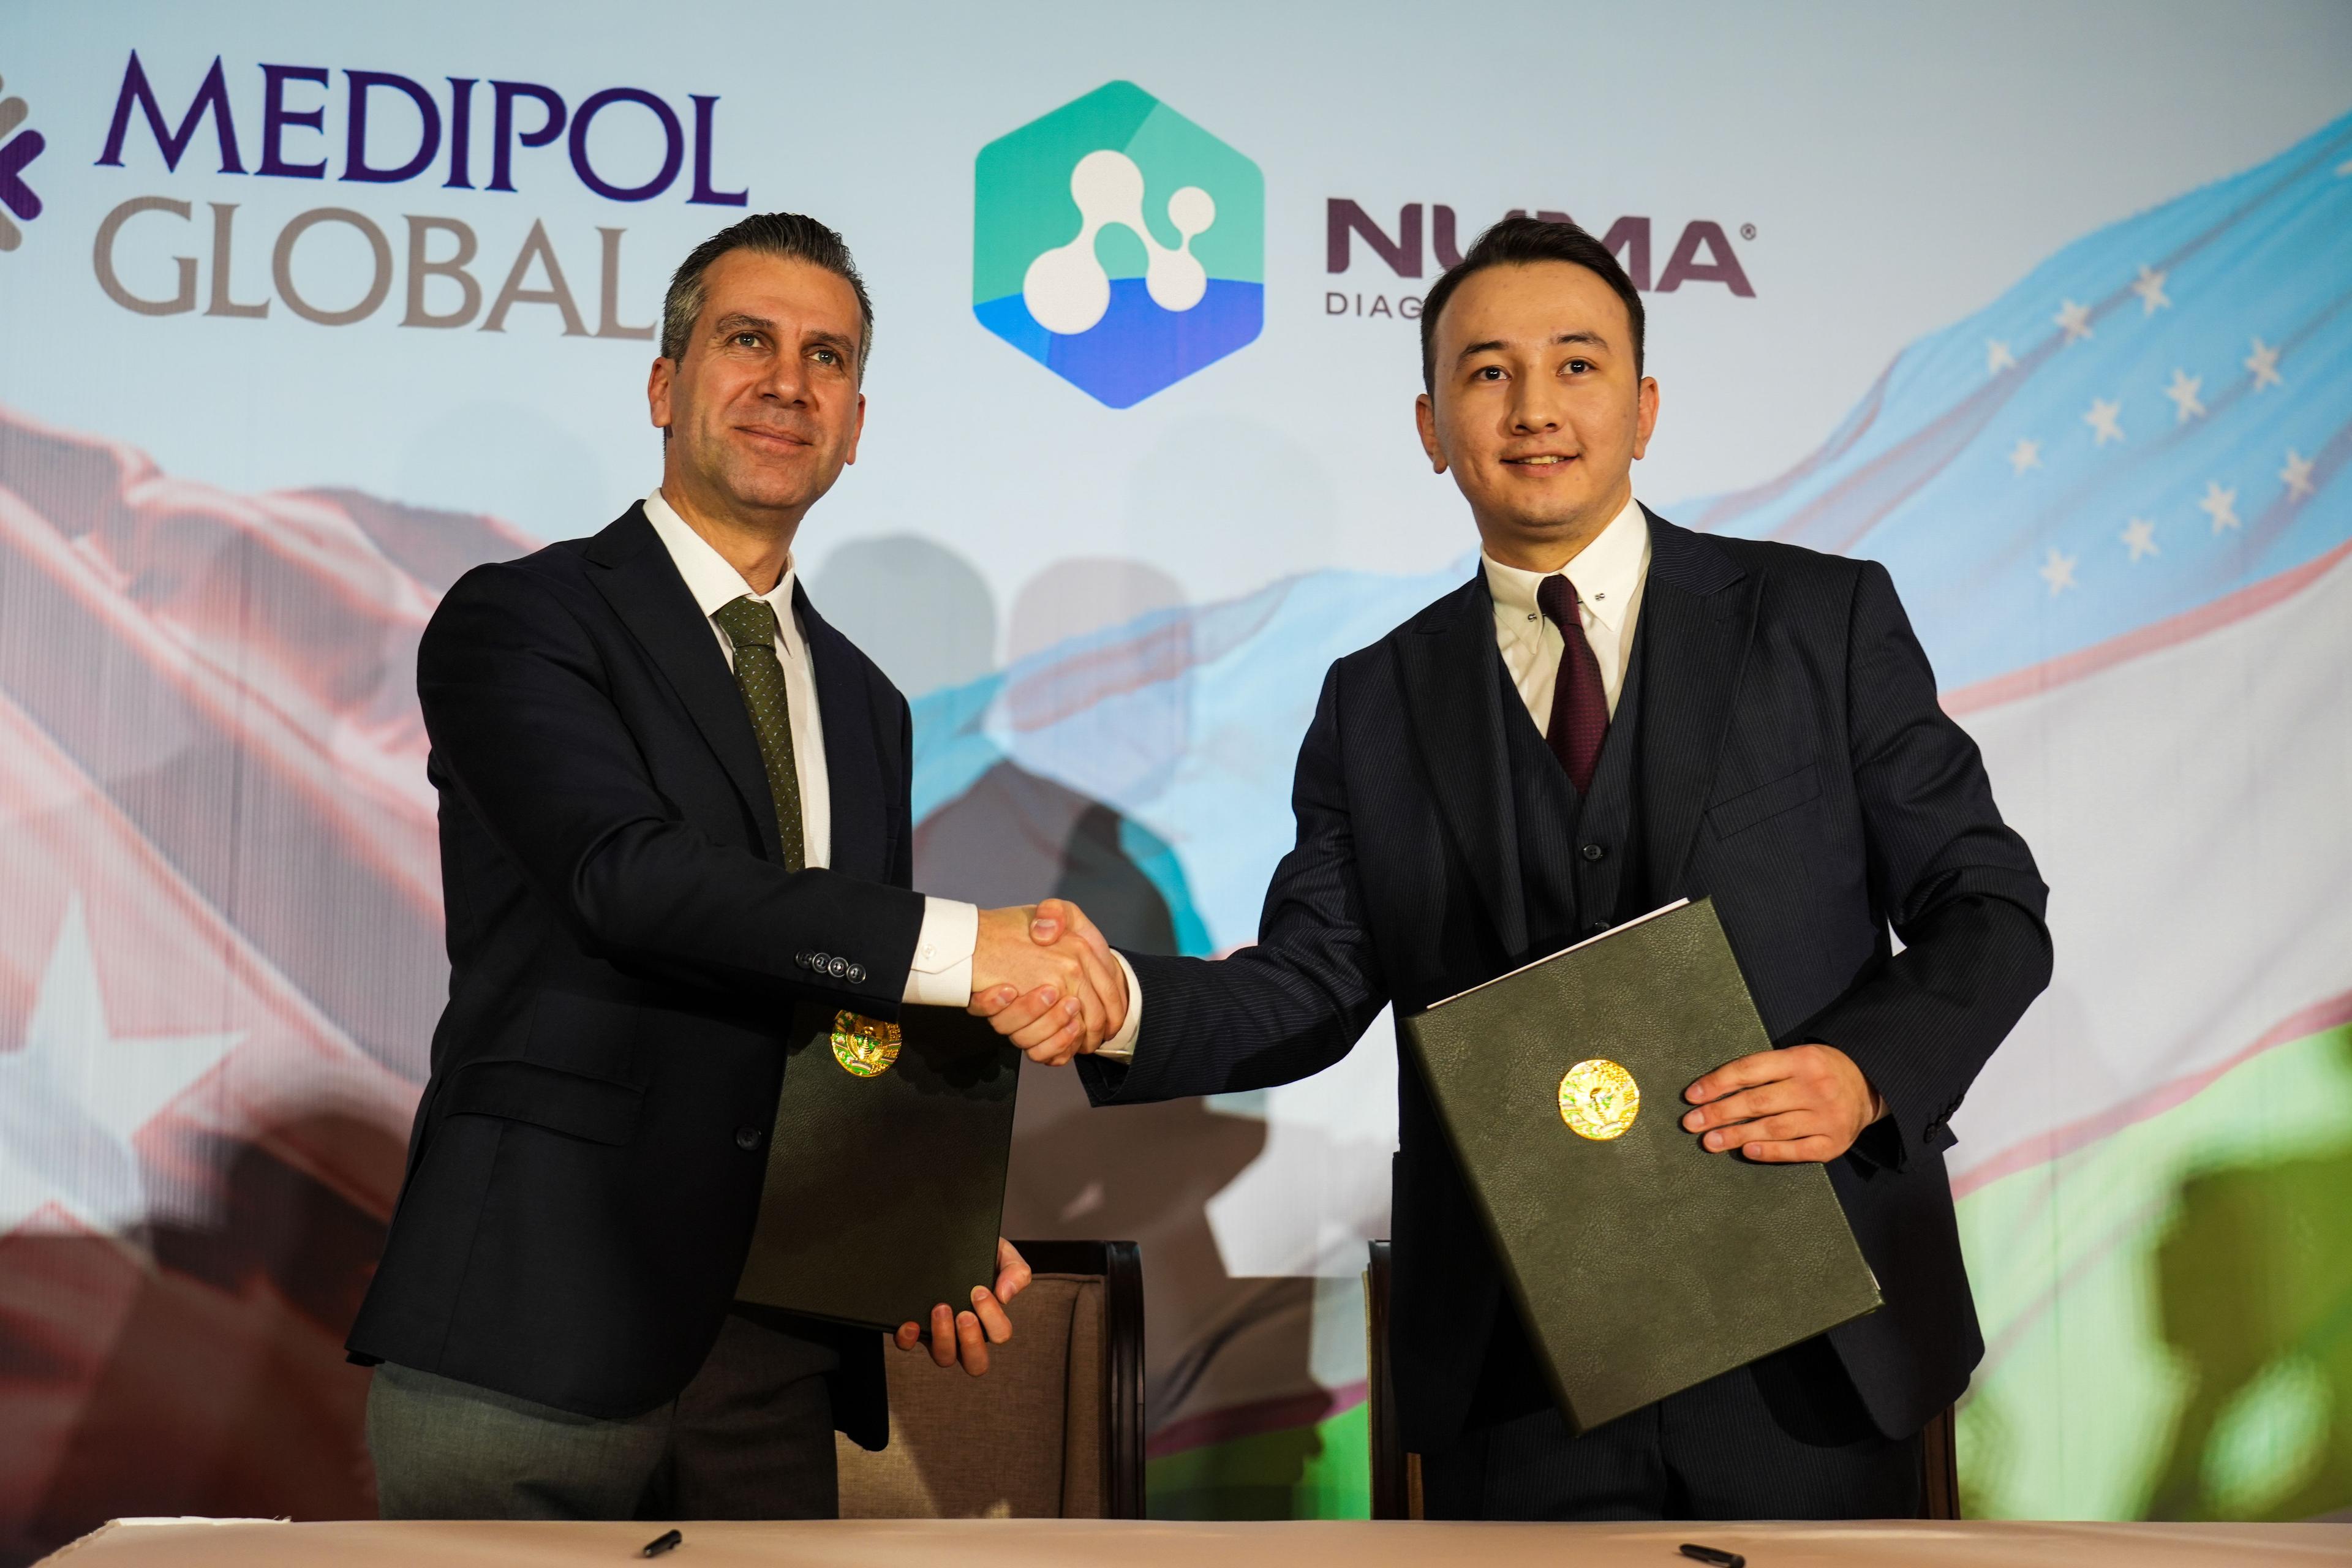 Numa diagnostics and Medipol signed a memorandum of cooperation